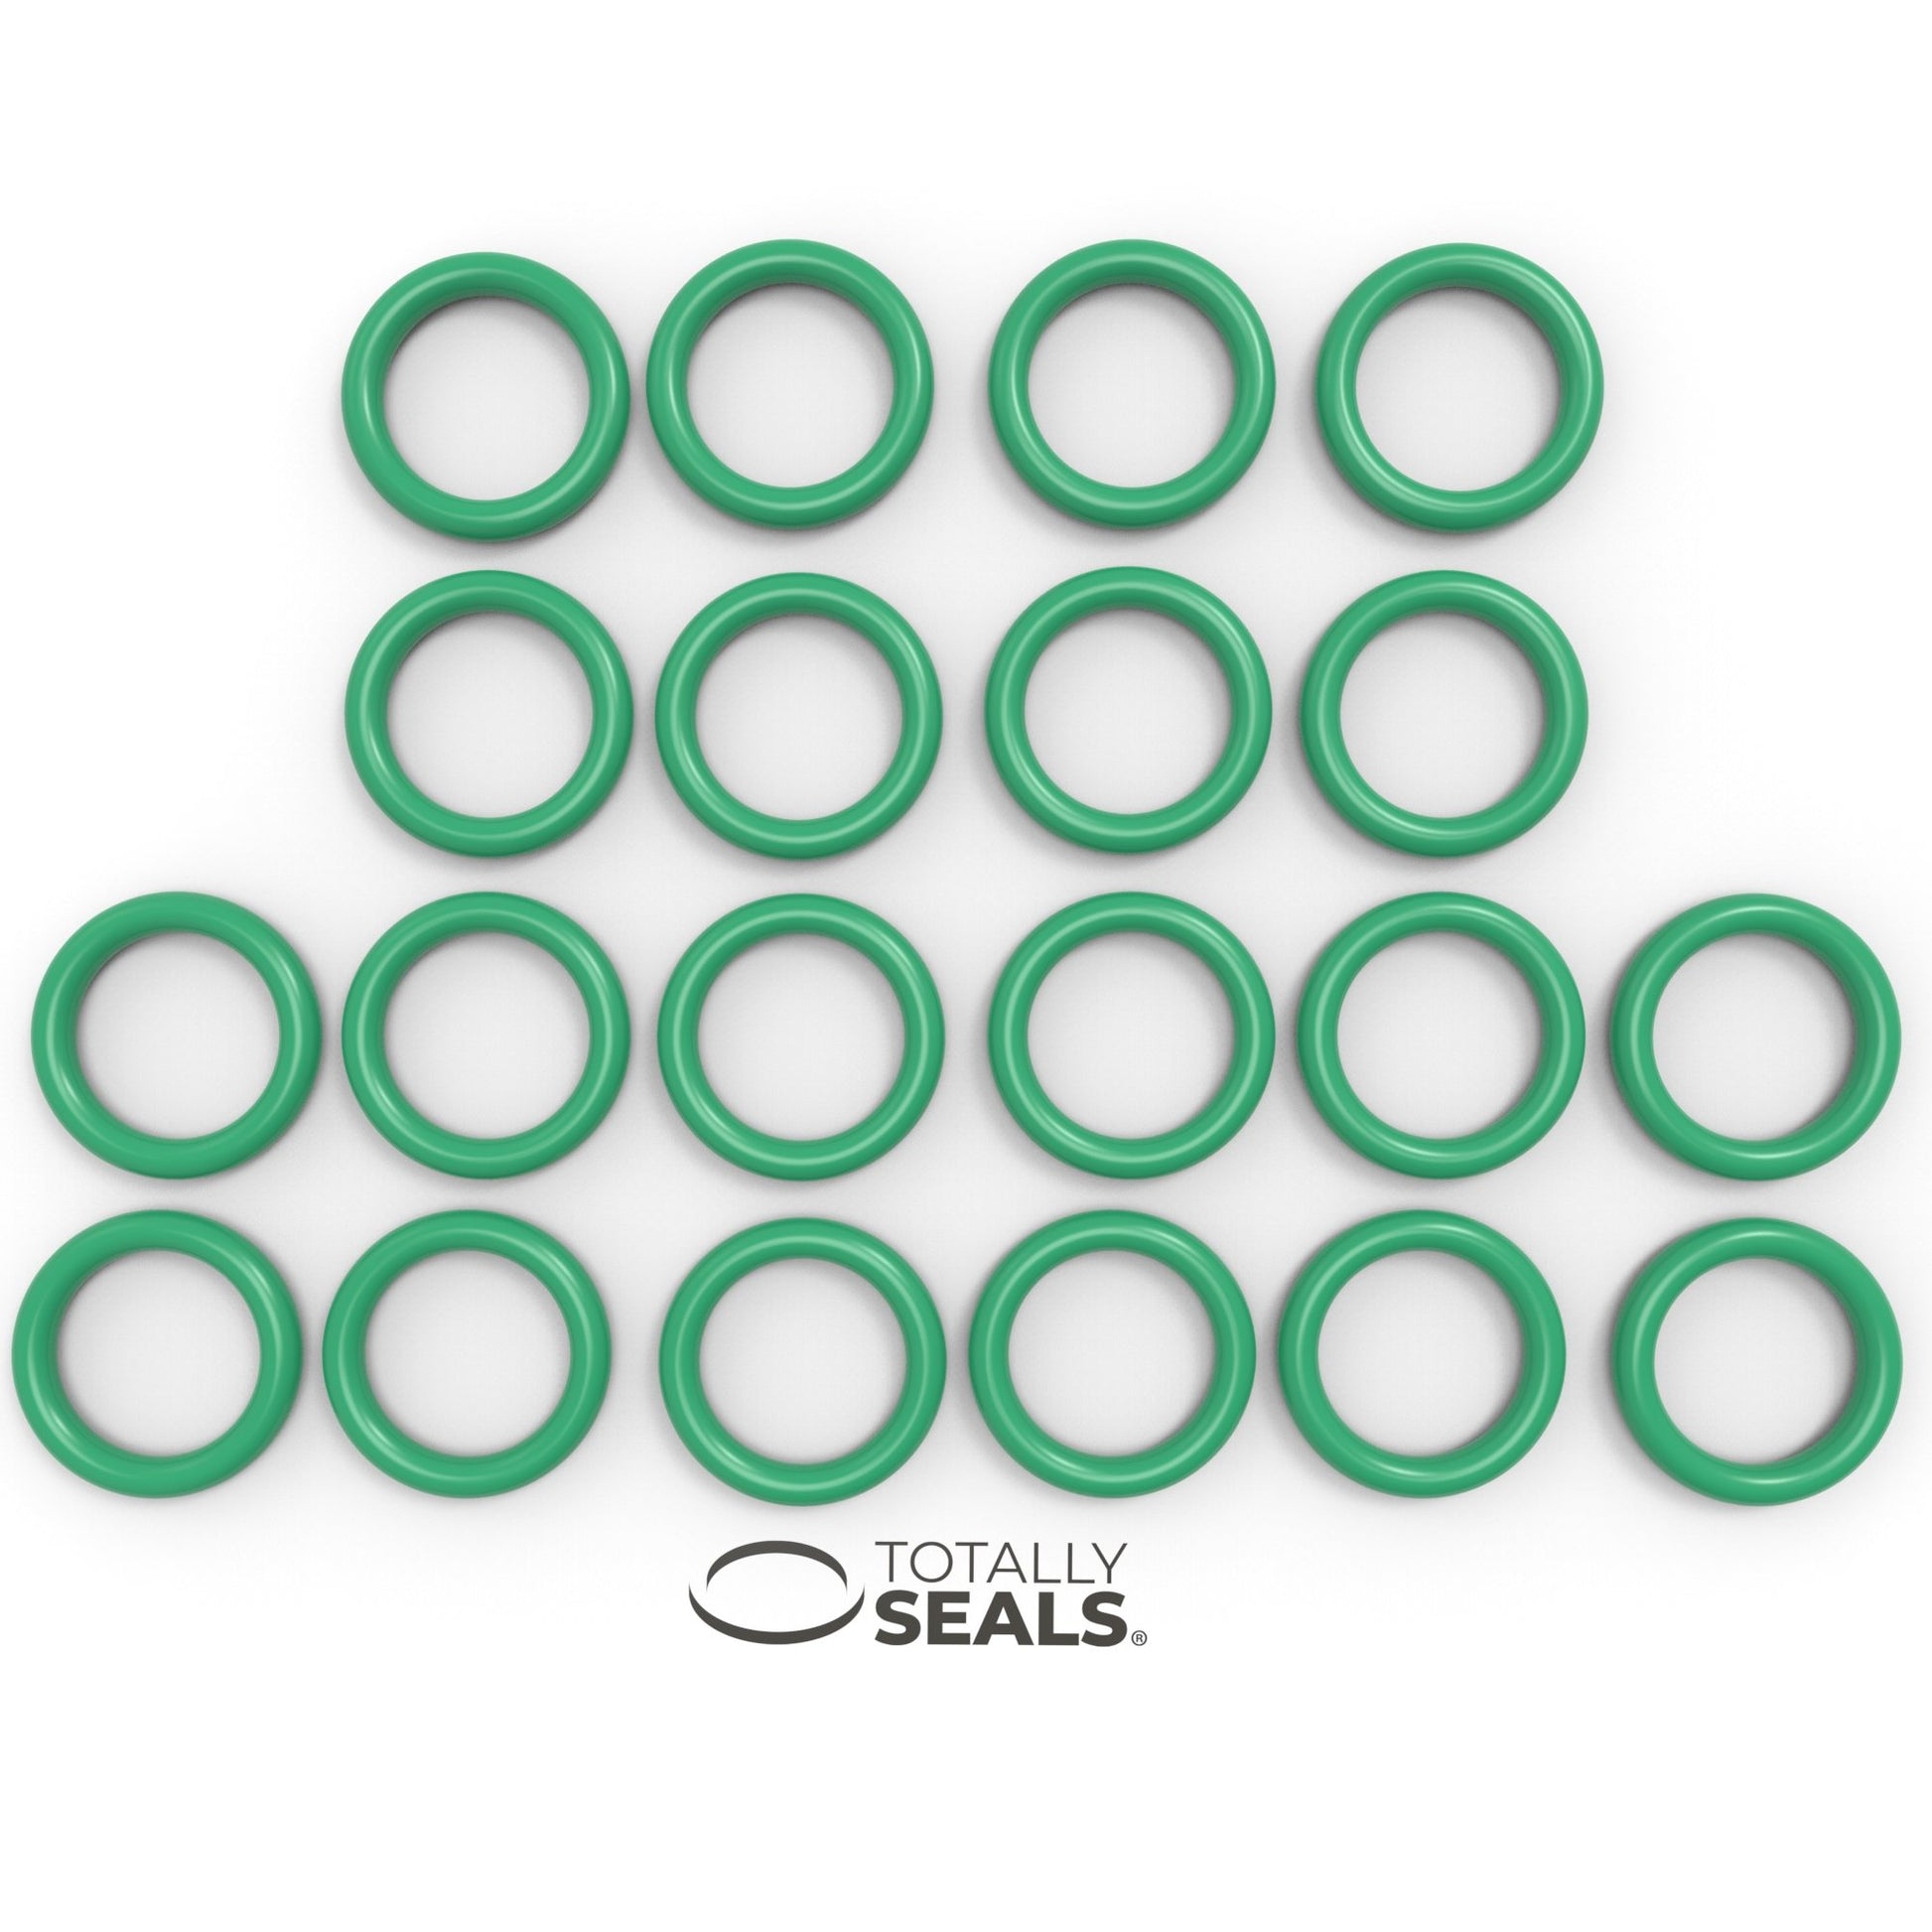 15mm x 3mm (21mm OD) FKM (Viton™) O-Rings - Totally Seals®